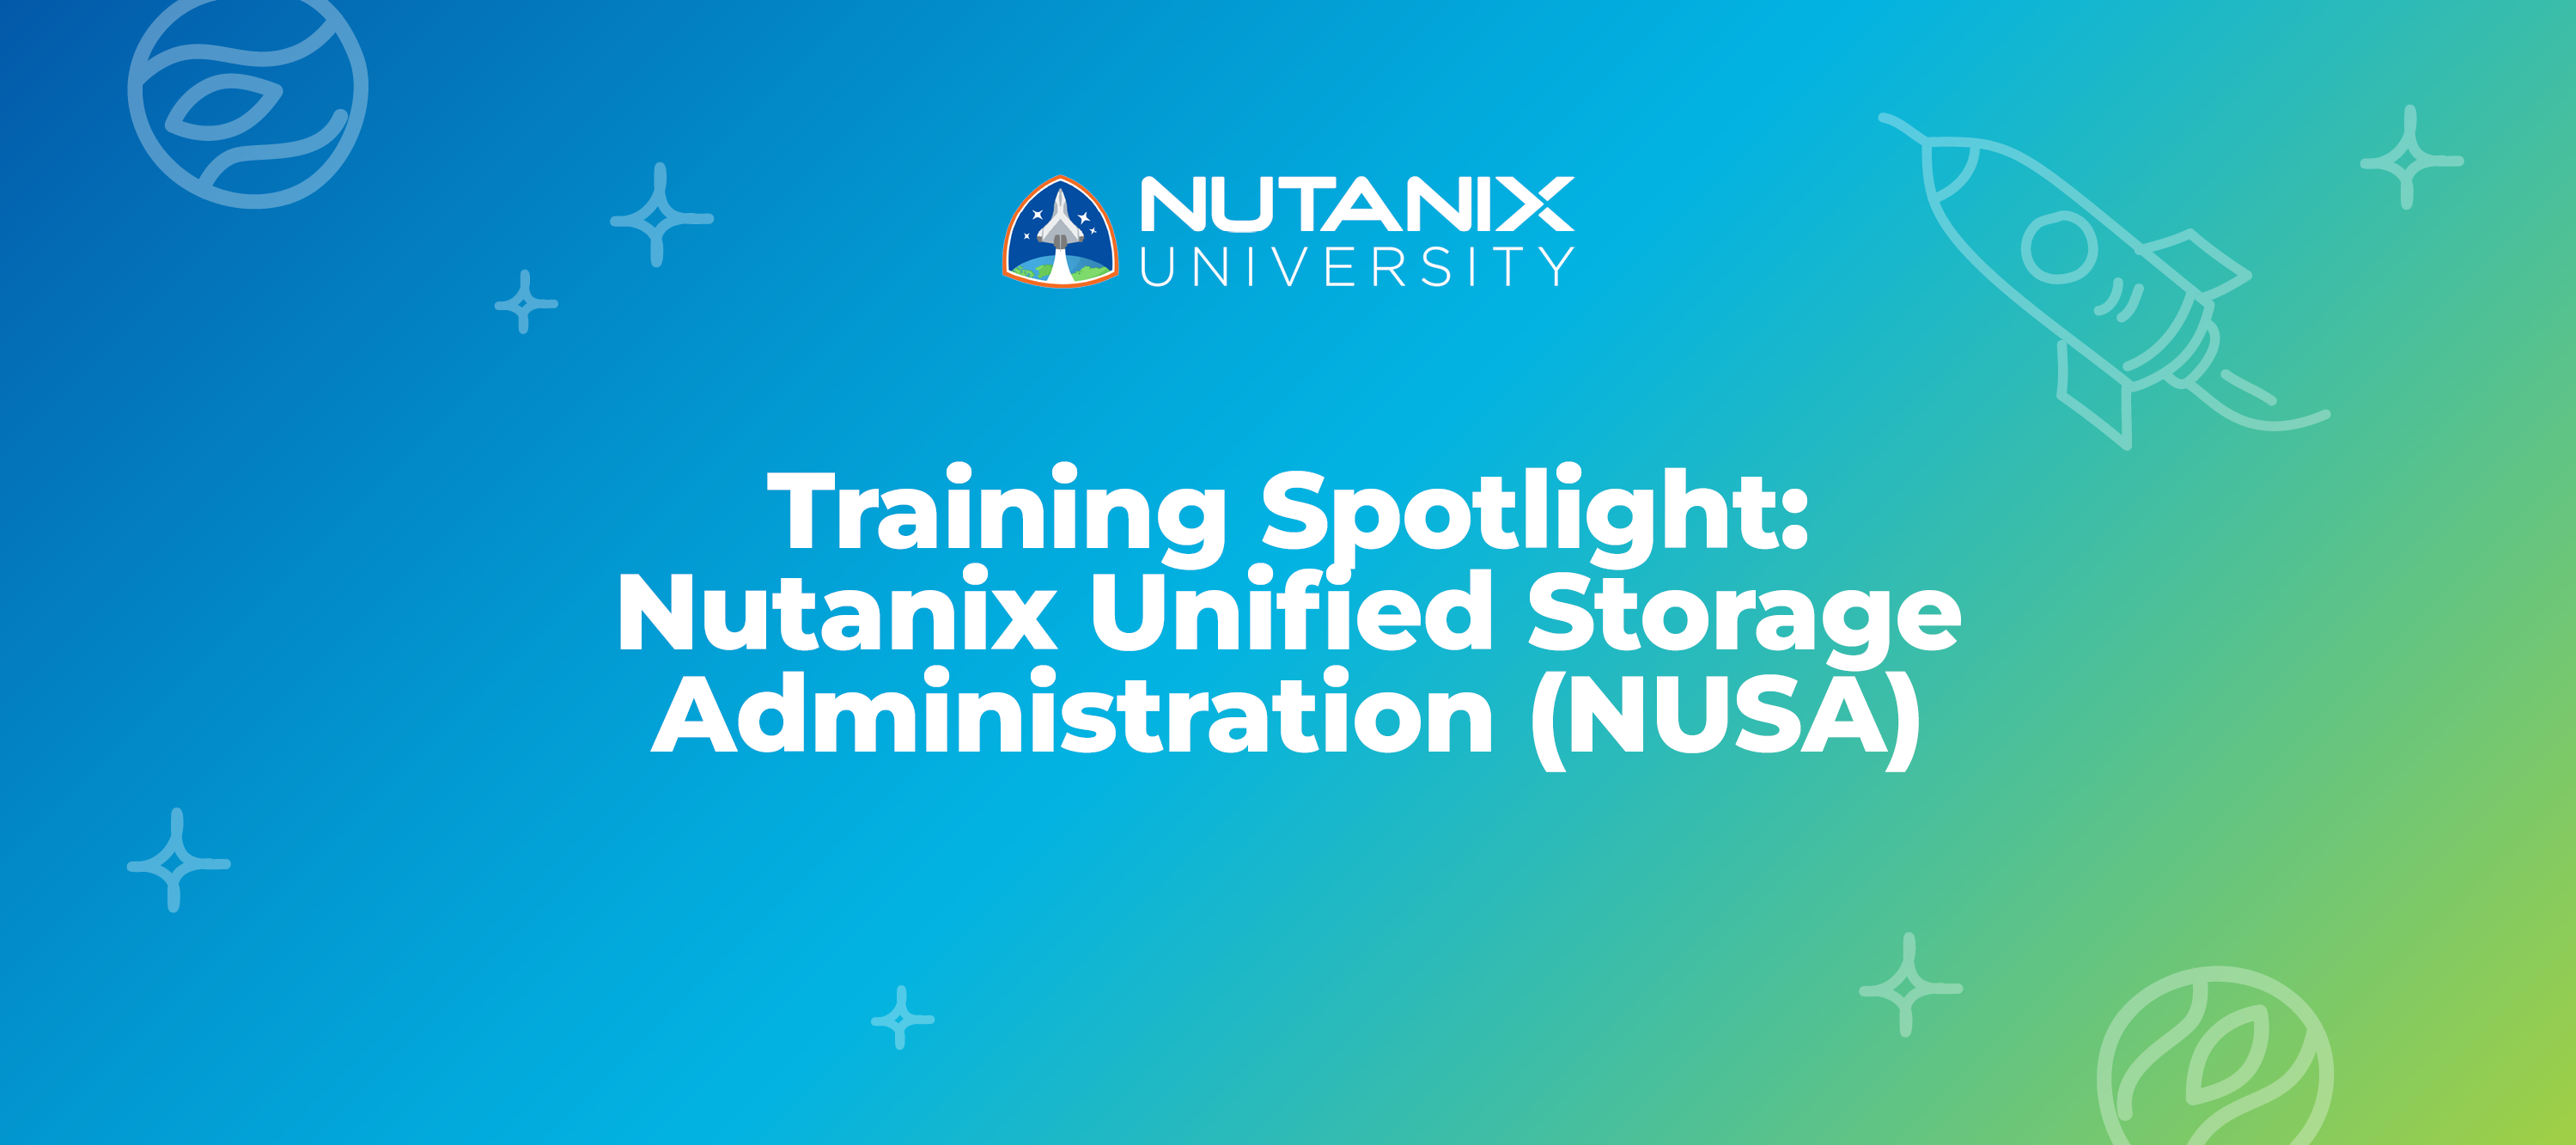 Training Spotlight: Nutanix Unified Storage Administration (NUSA)